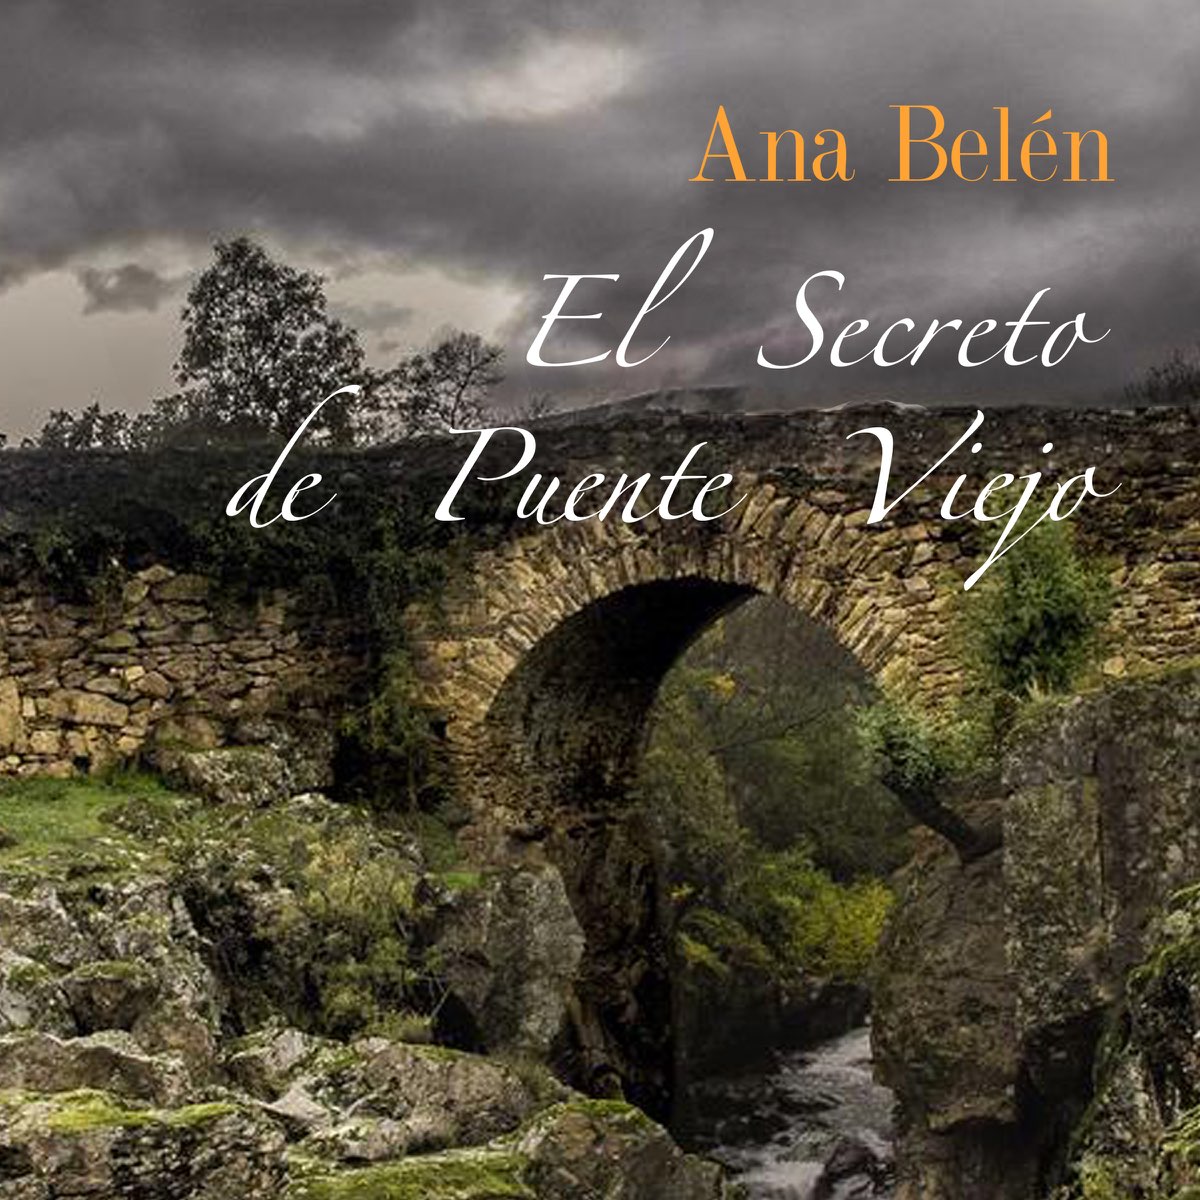 El Secreto de Puente Viejo - Single by Ana Belén on Apple Music